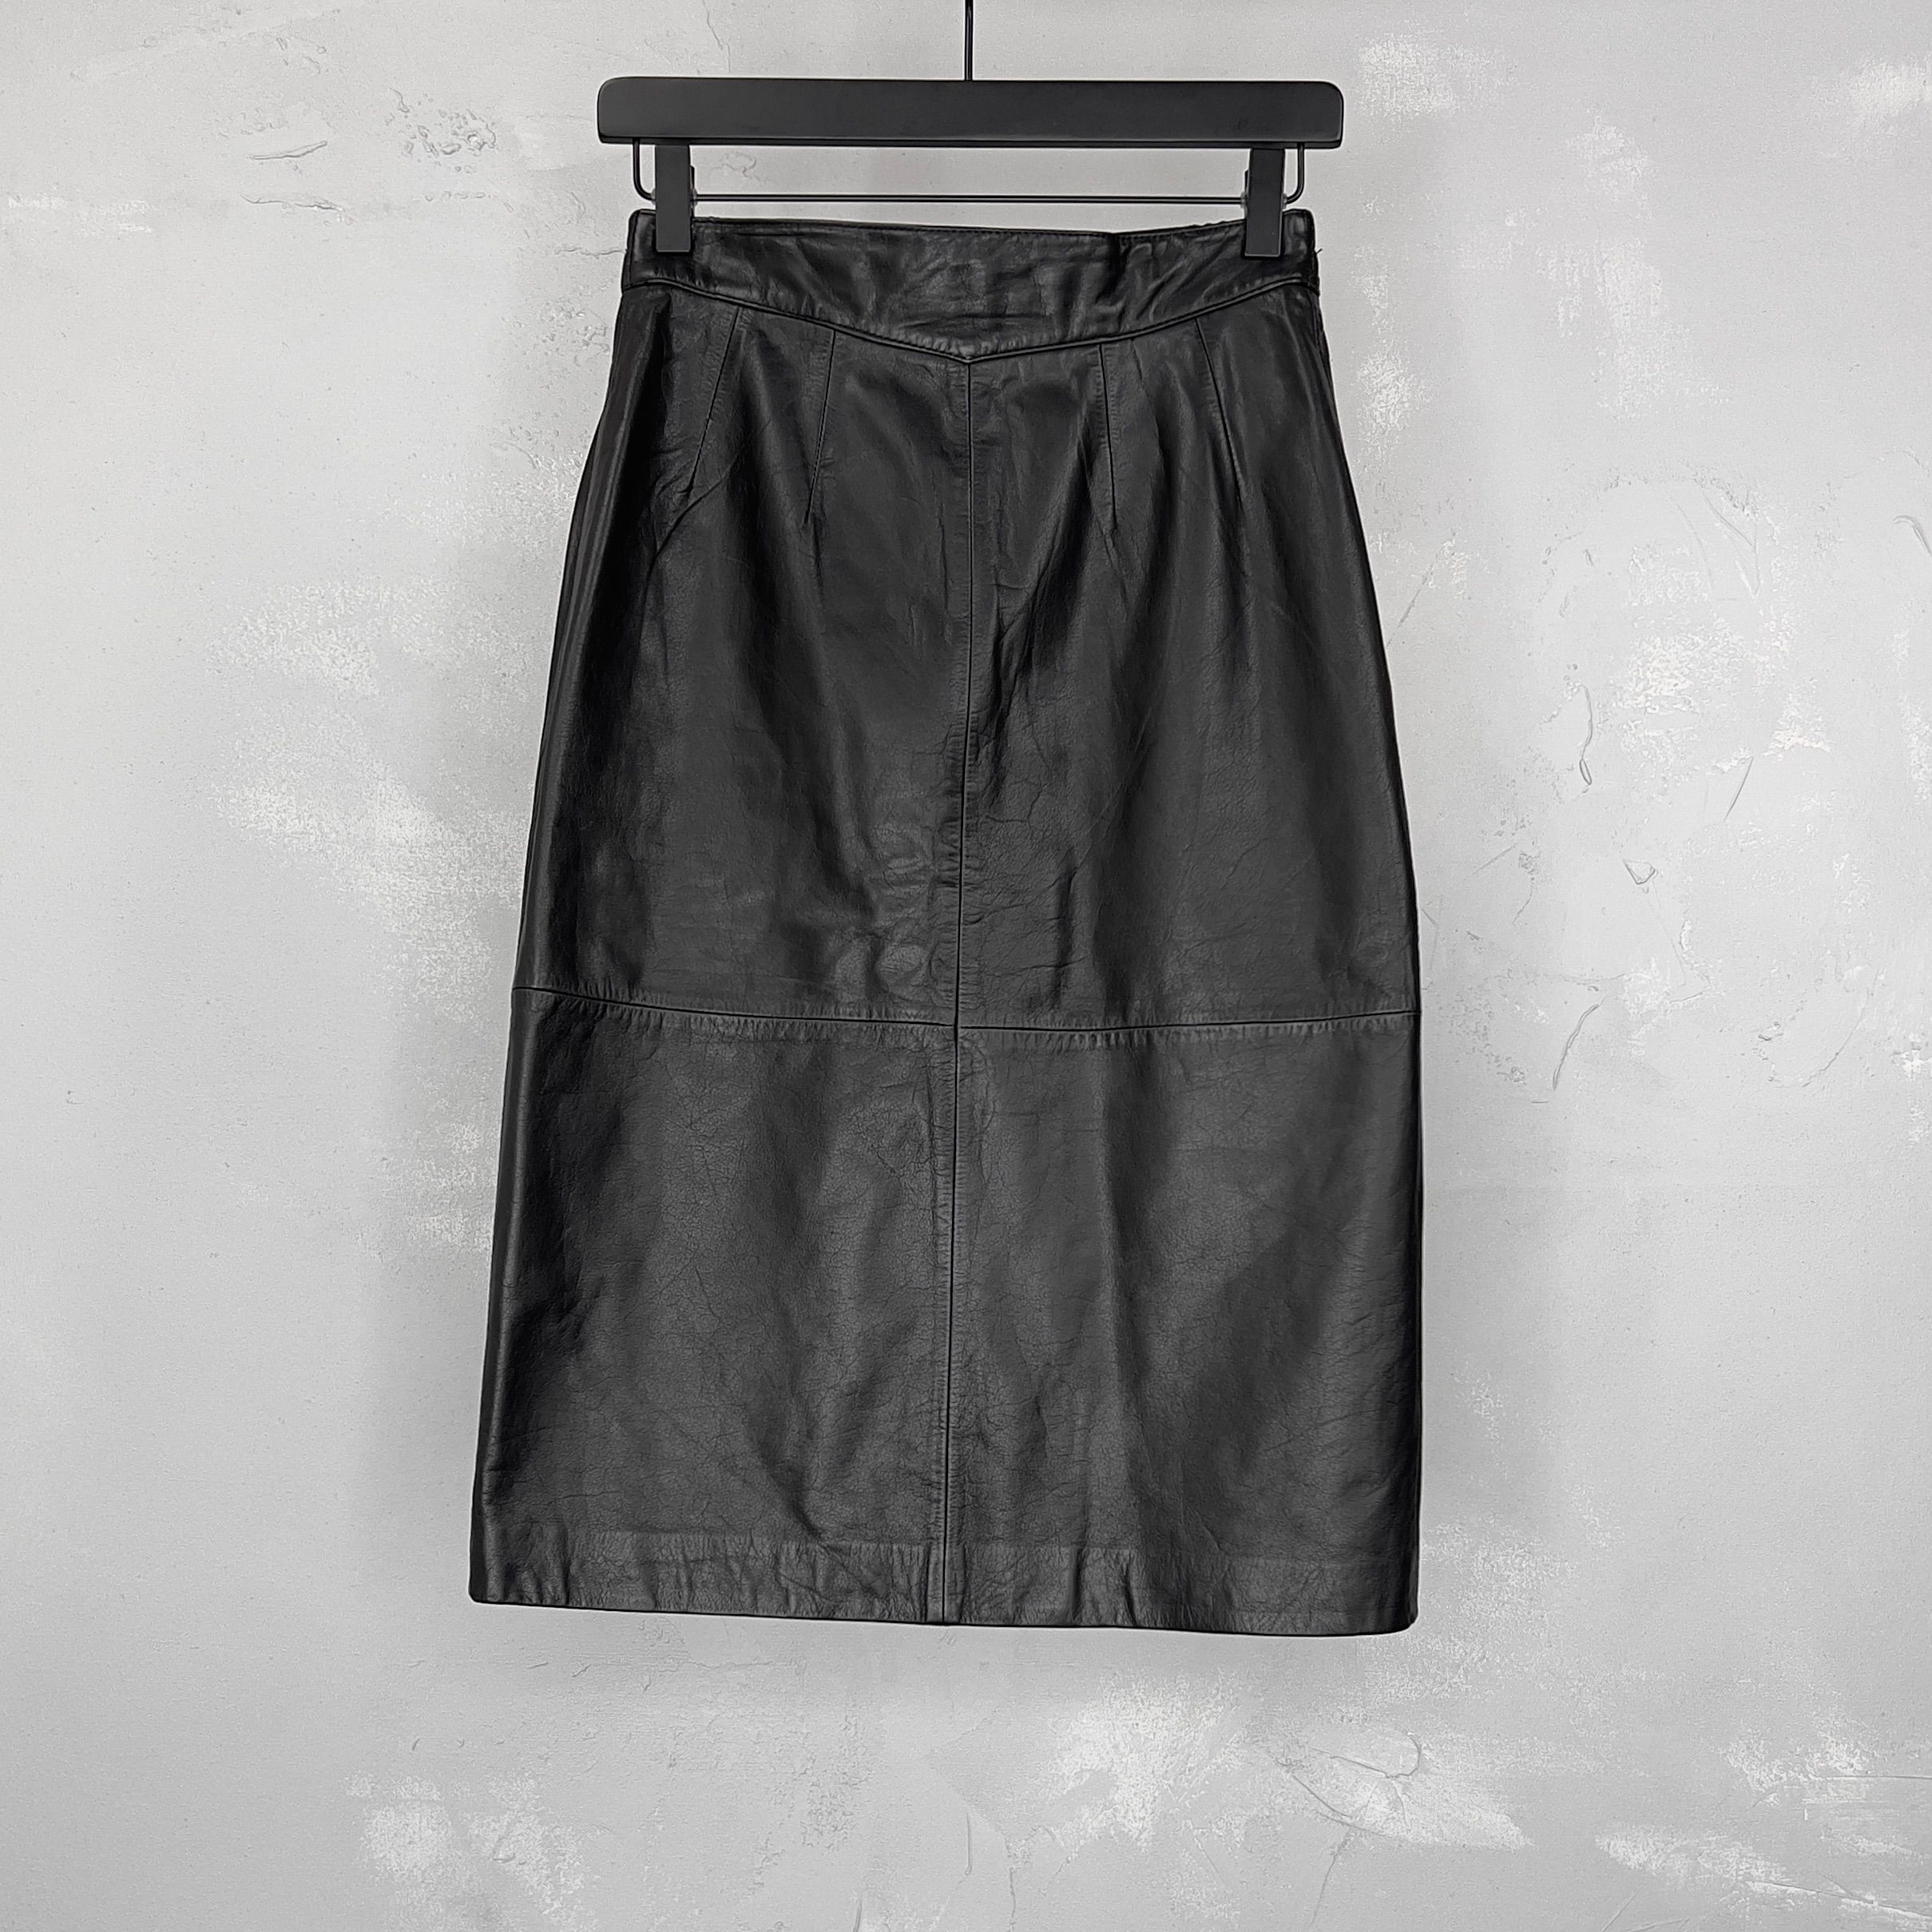 Vintage Vintage 1980s Switzer's Black Genuine Leather Skirt Size 26" / US 2 / IT 38 - 1 Preview